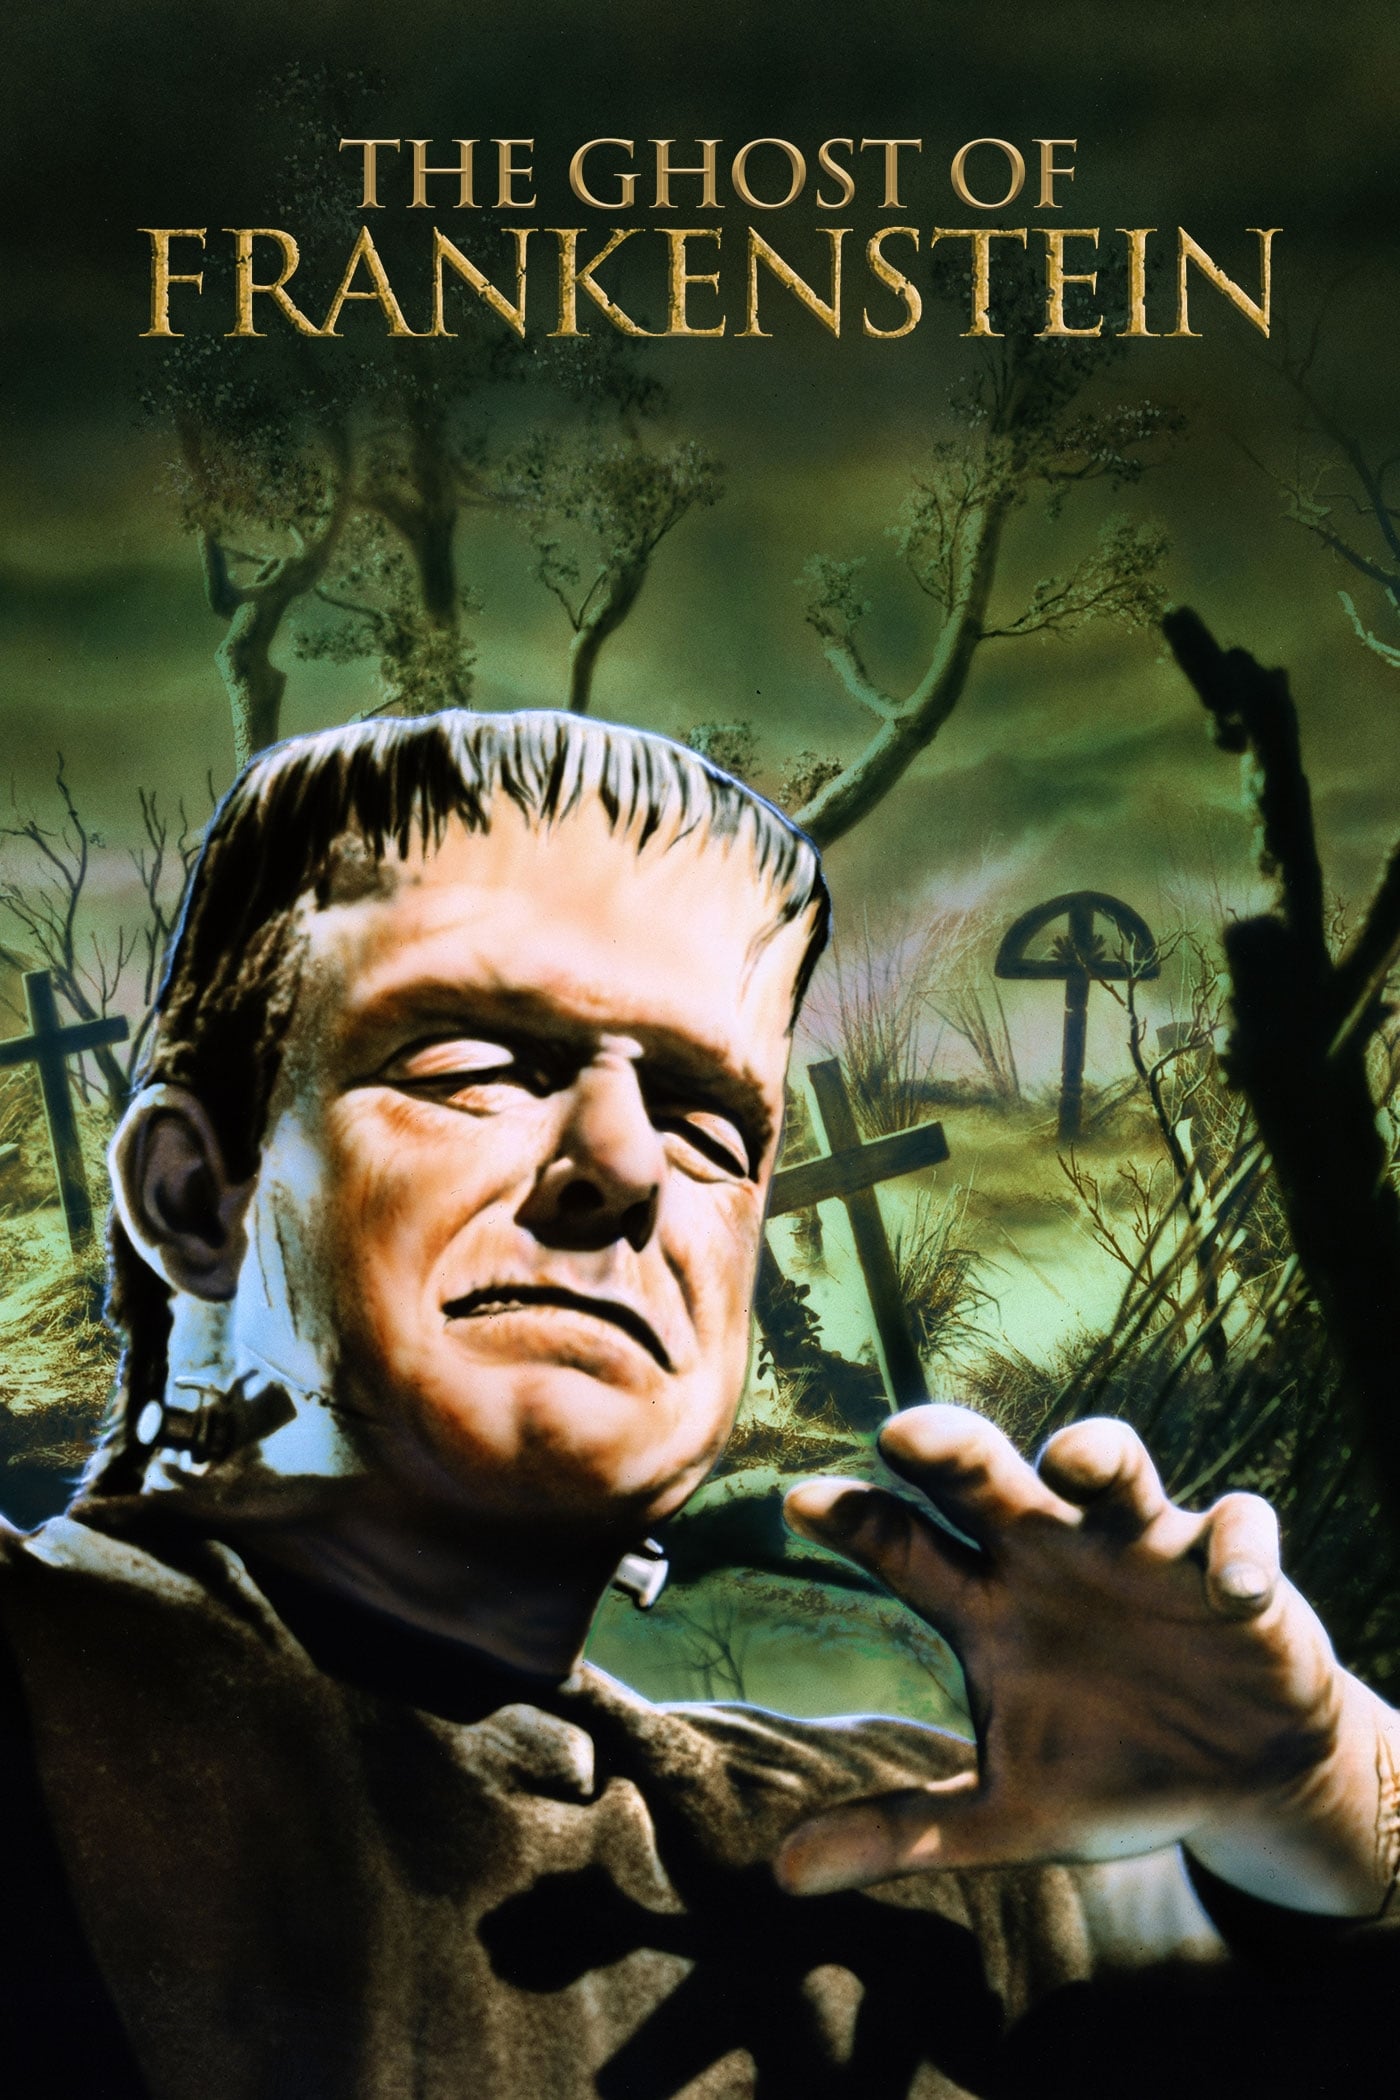 O Fantasma de Frankenstein (1942)